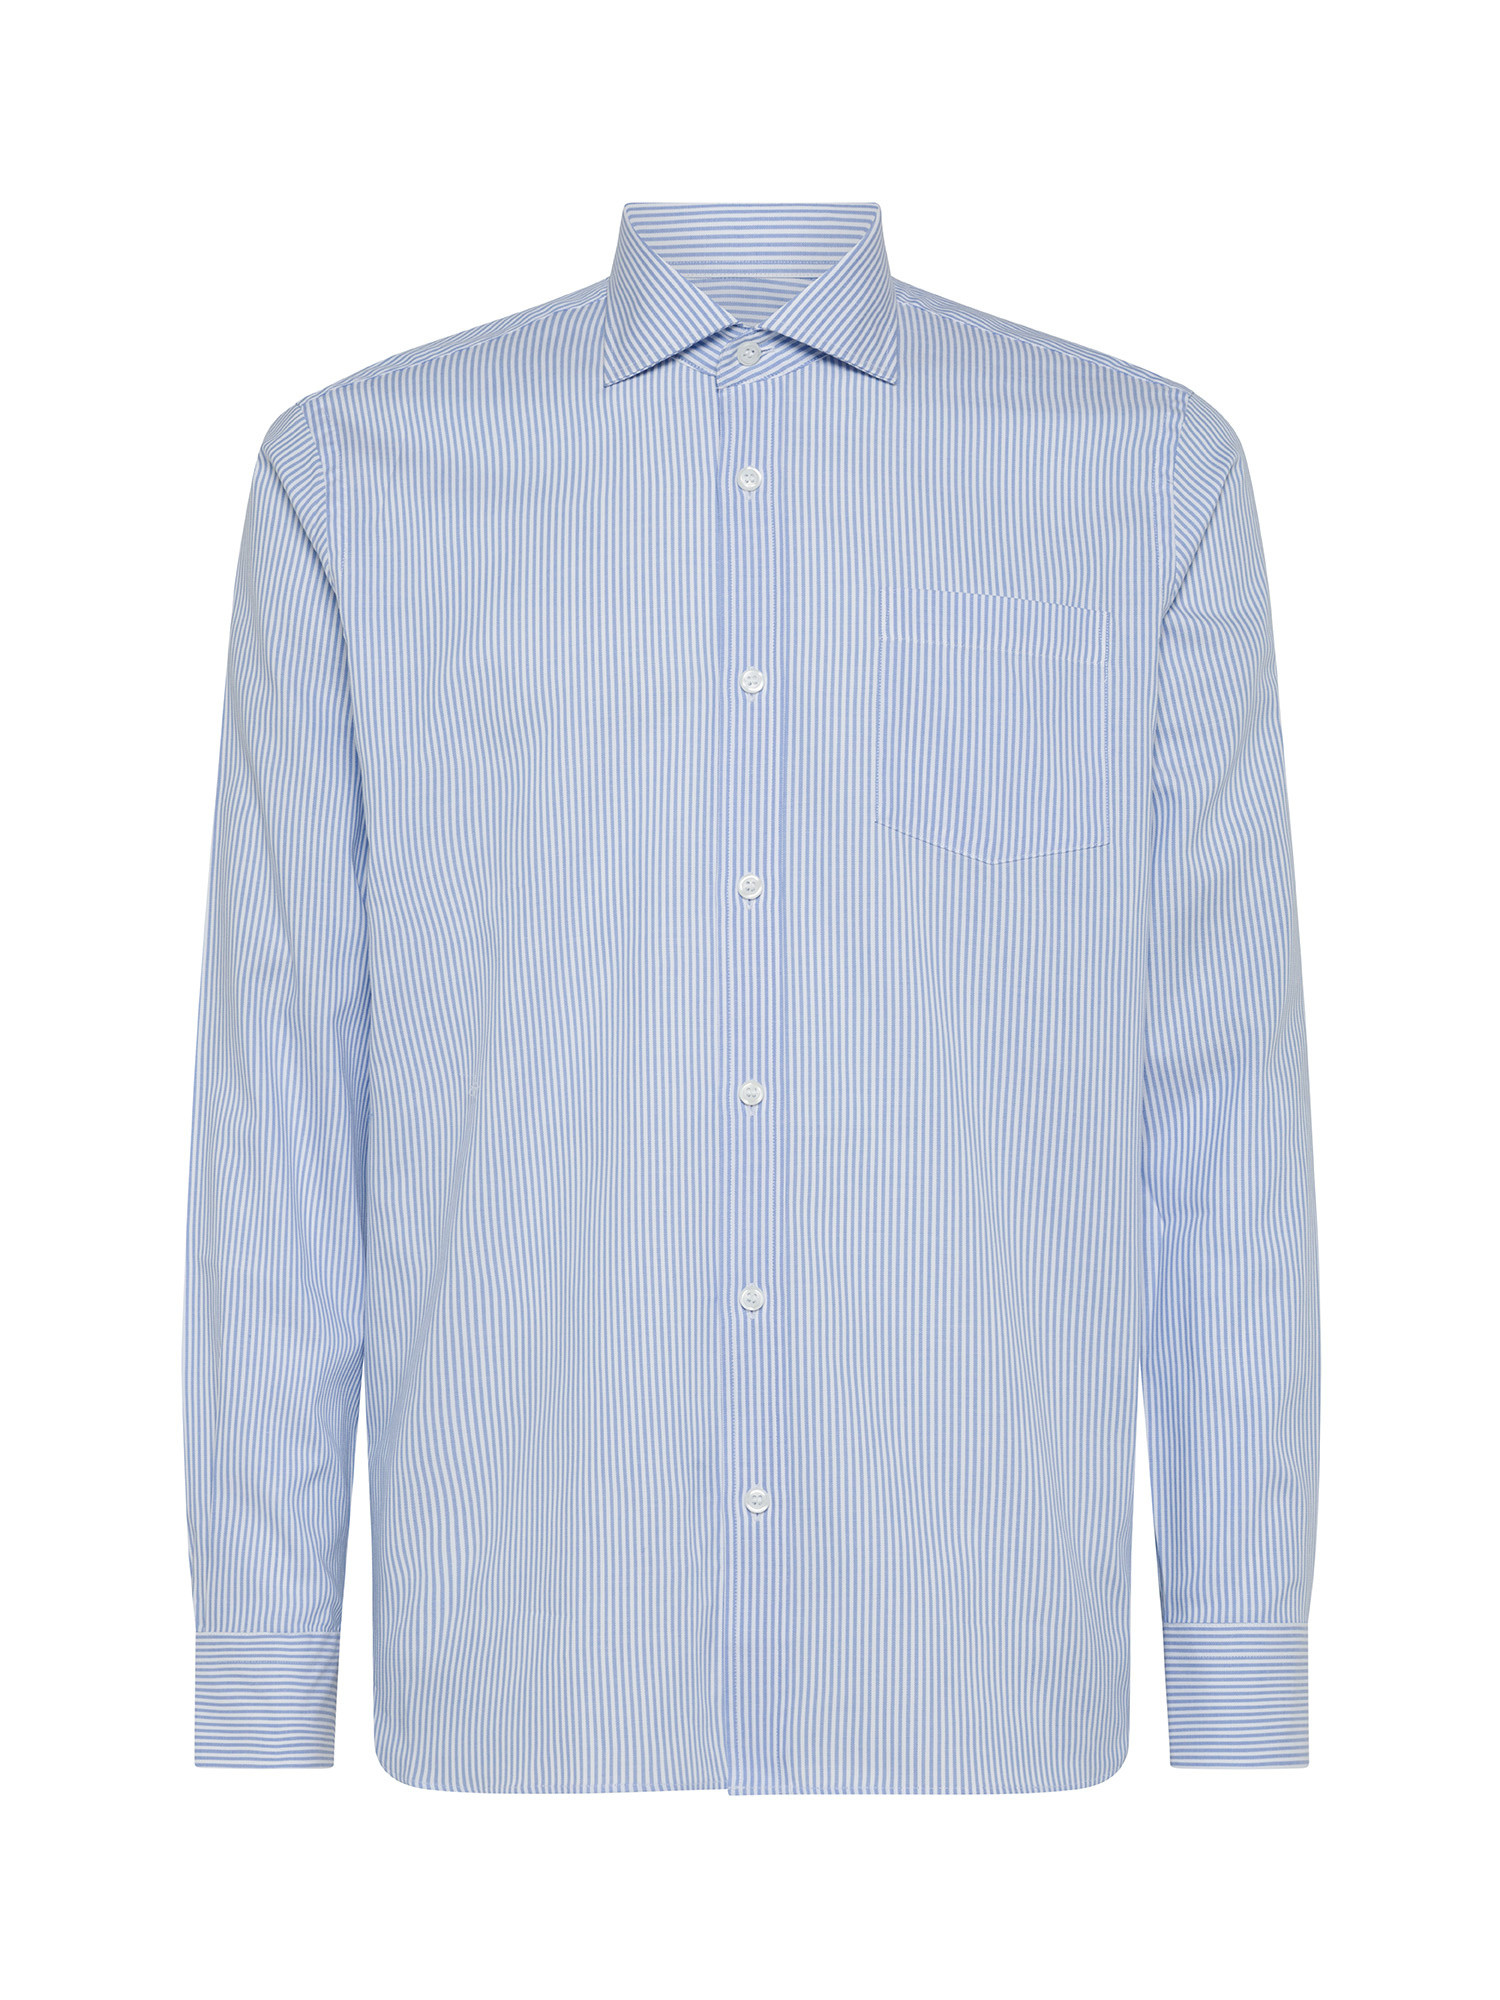 Luca D'Altieri - Camicia tailor fit in puro cotone, Azzurro, large image number 0